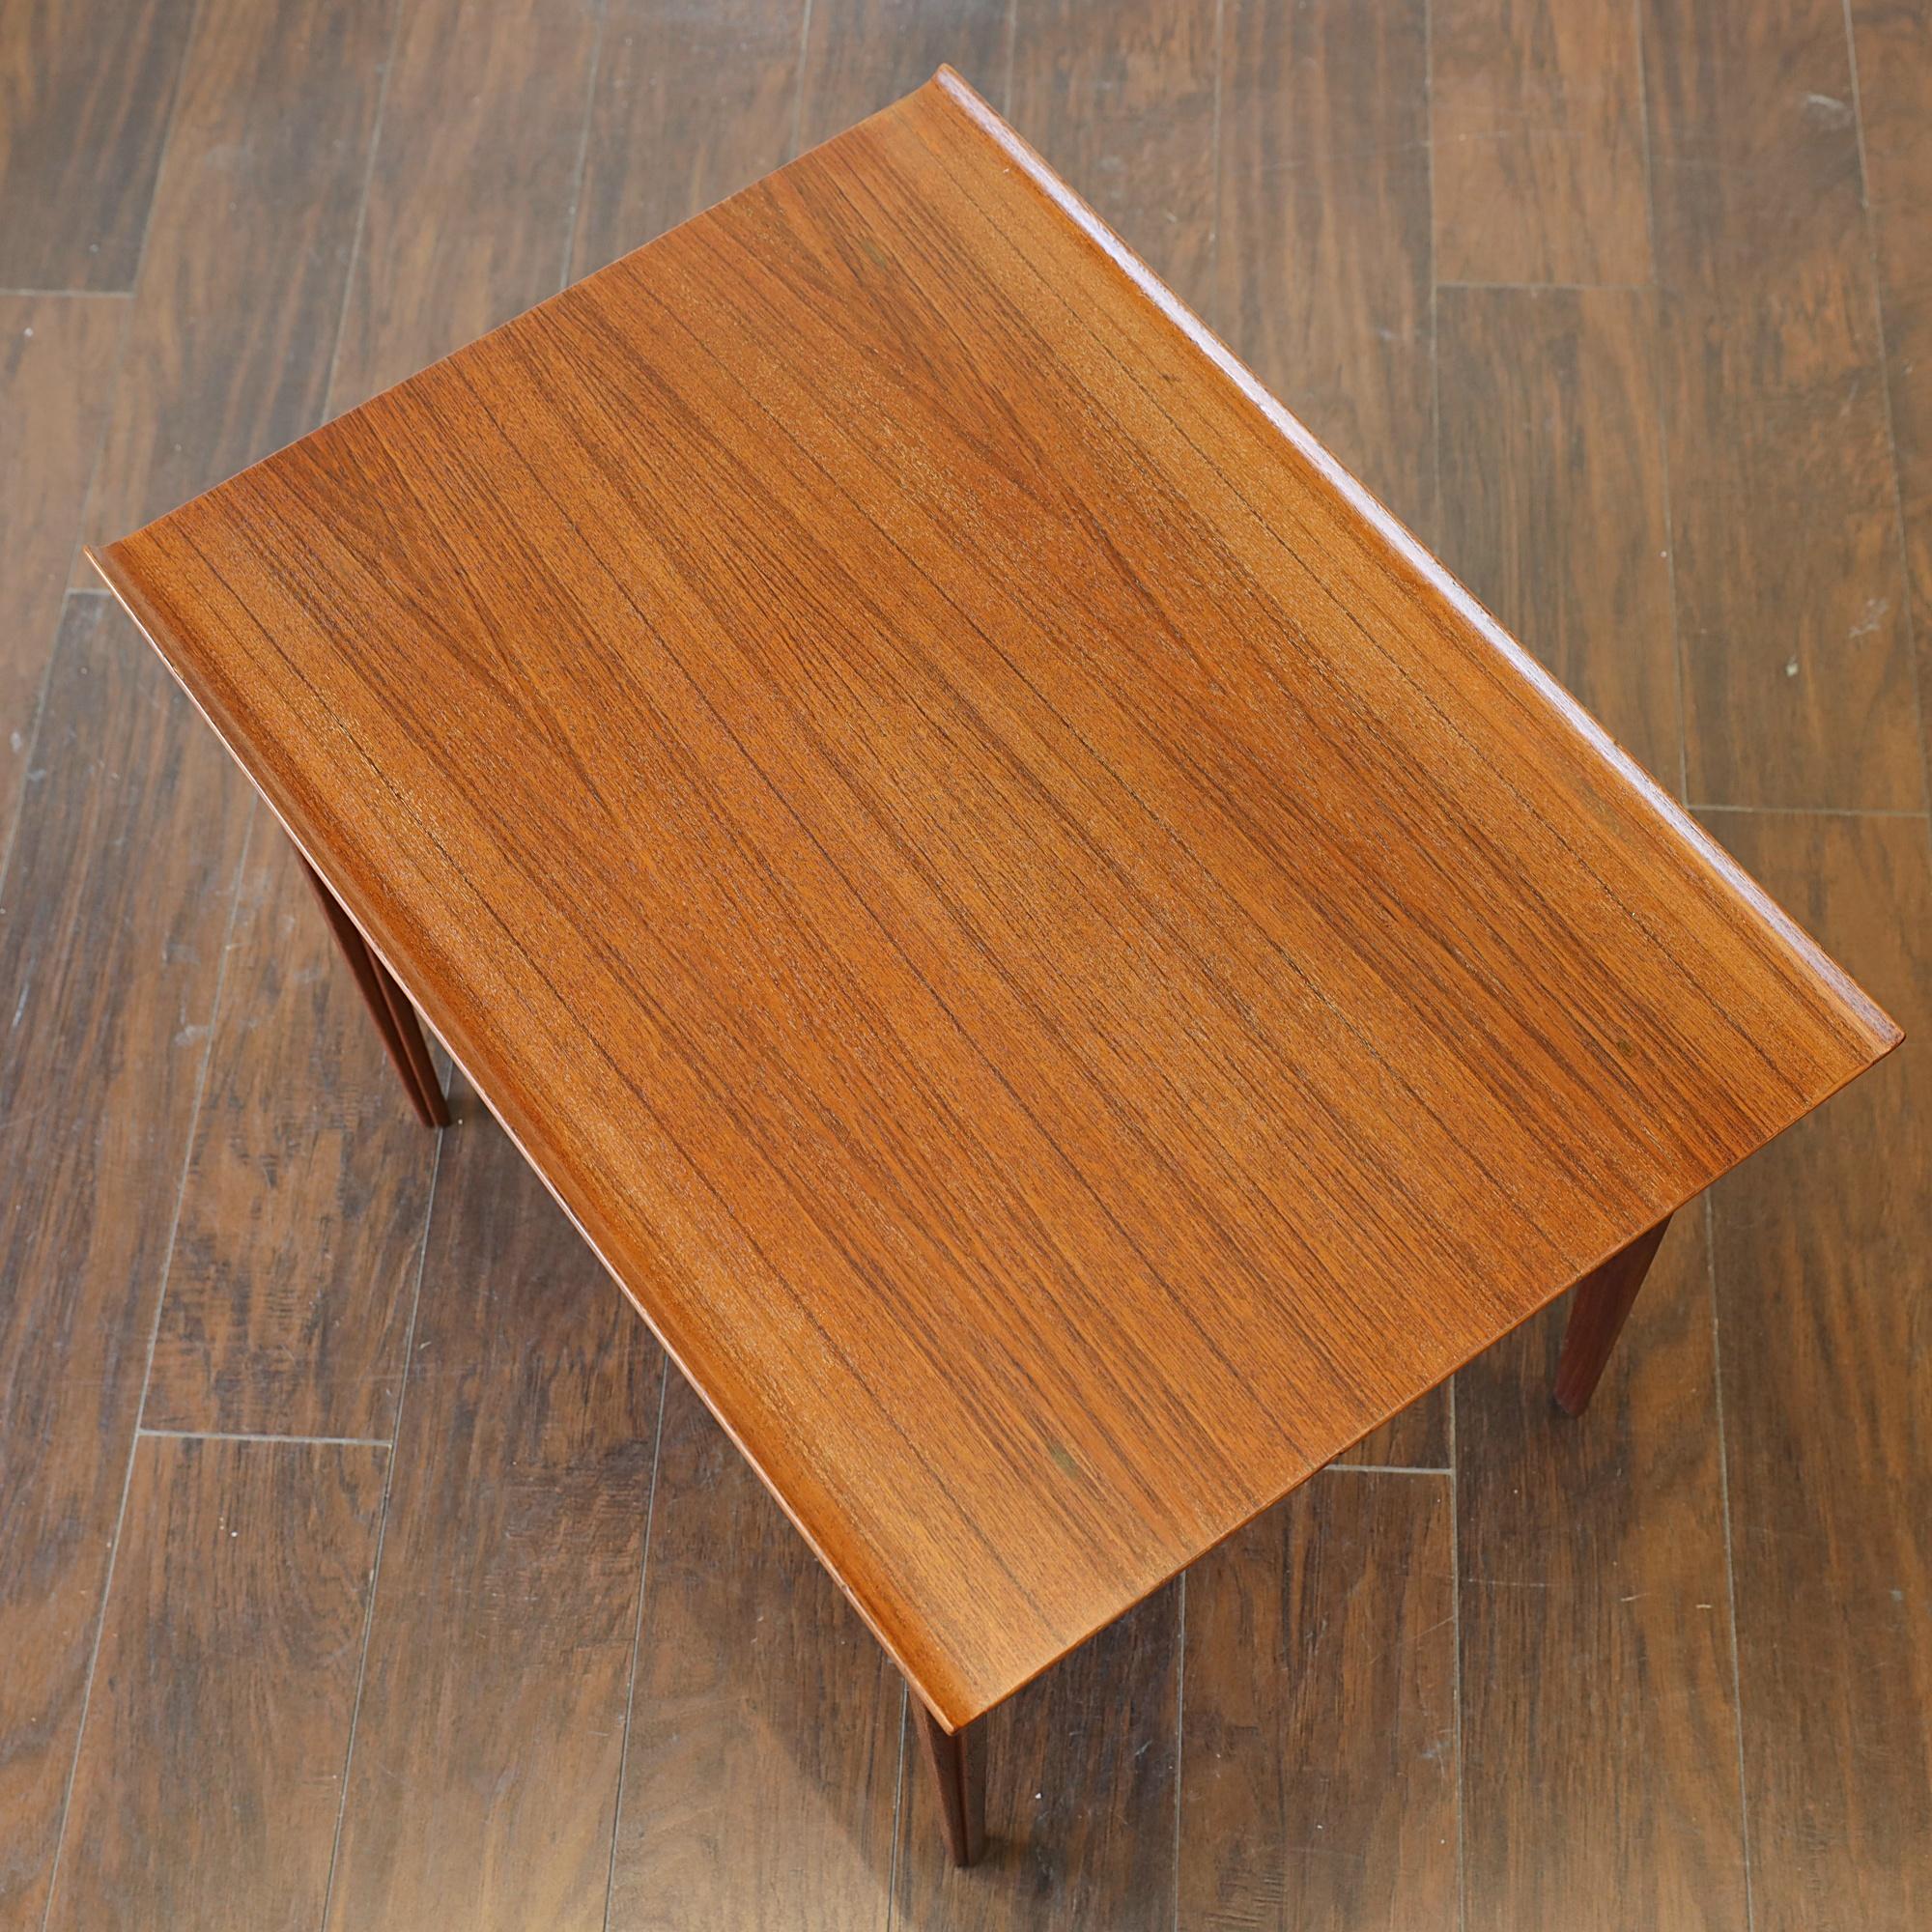 Mid-20th Century Danish Modern Teak FD533 Side Table by Finn Juhl for France & Son For Sale